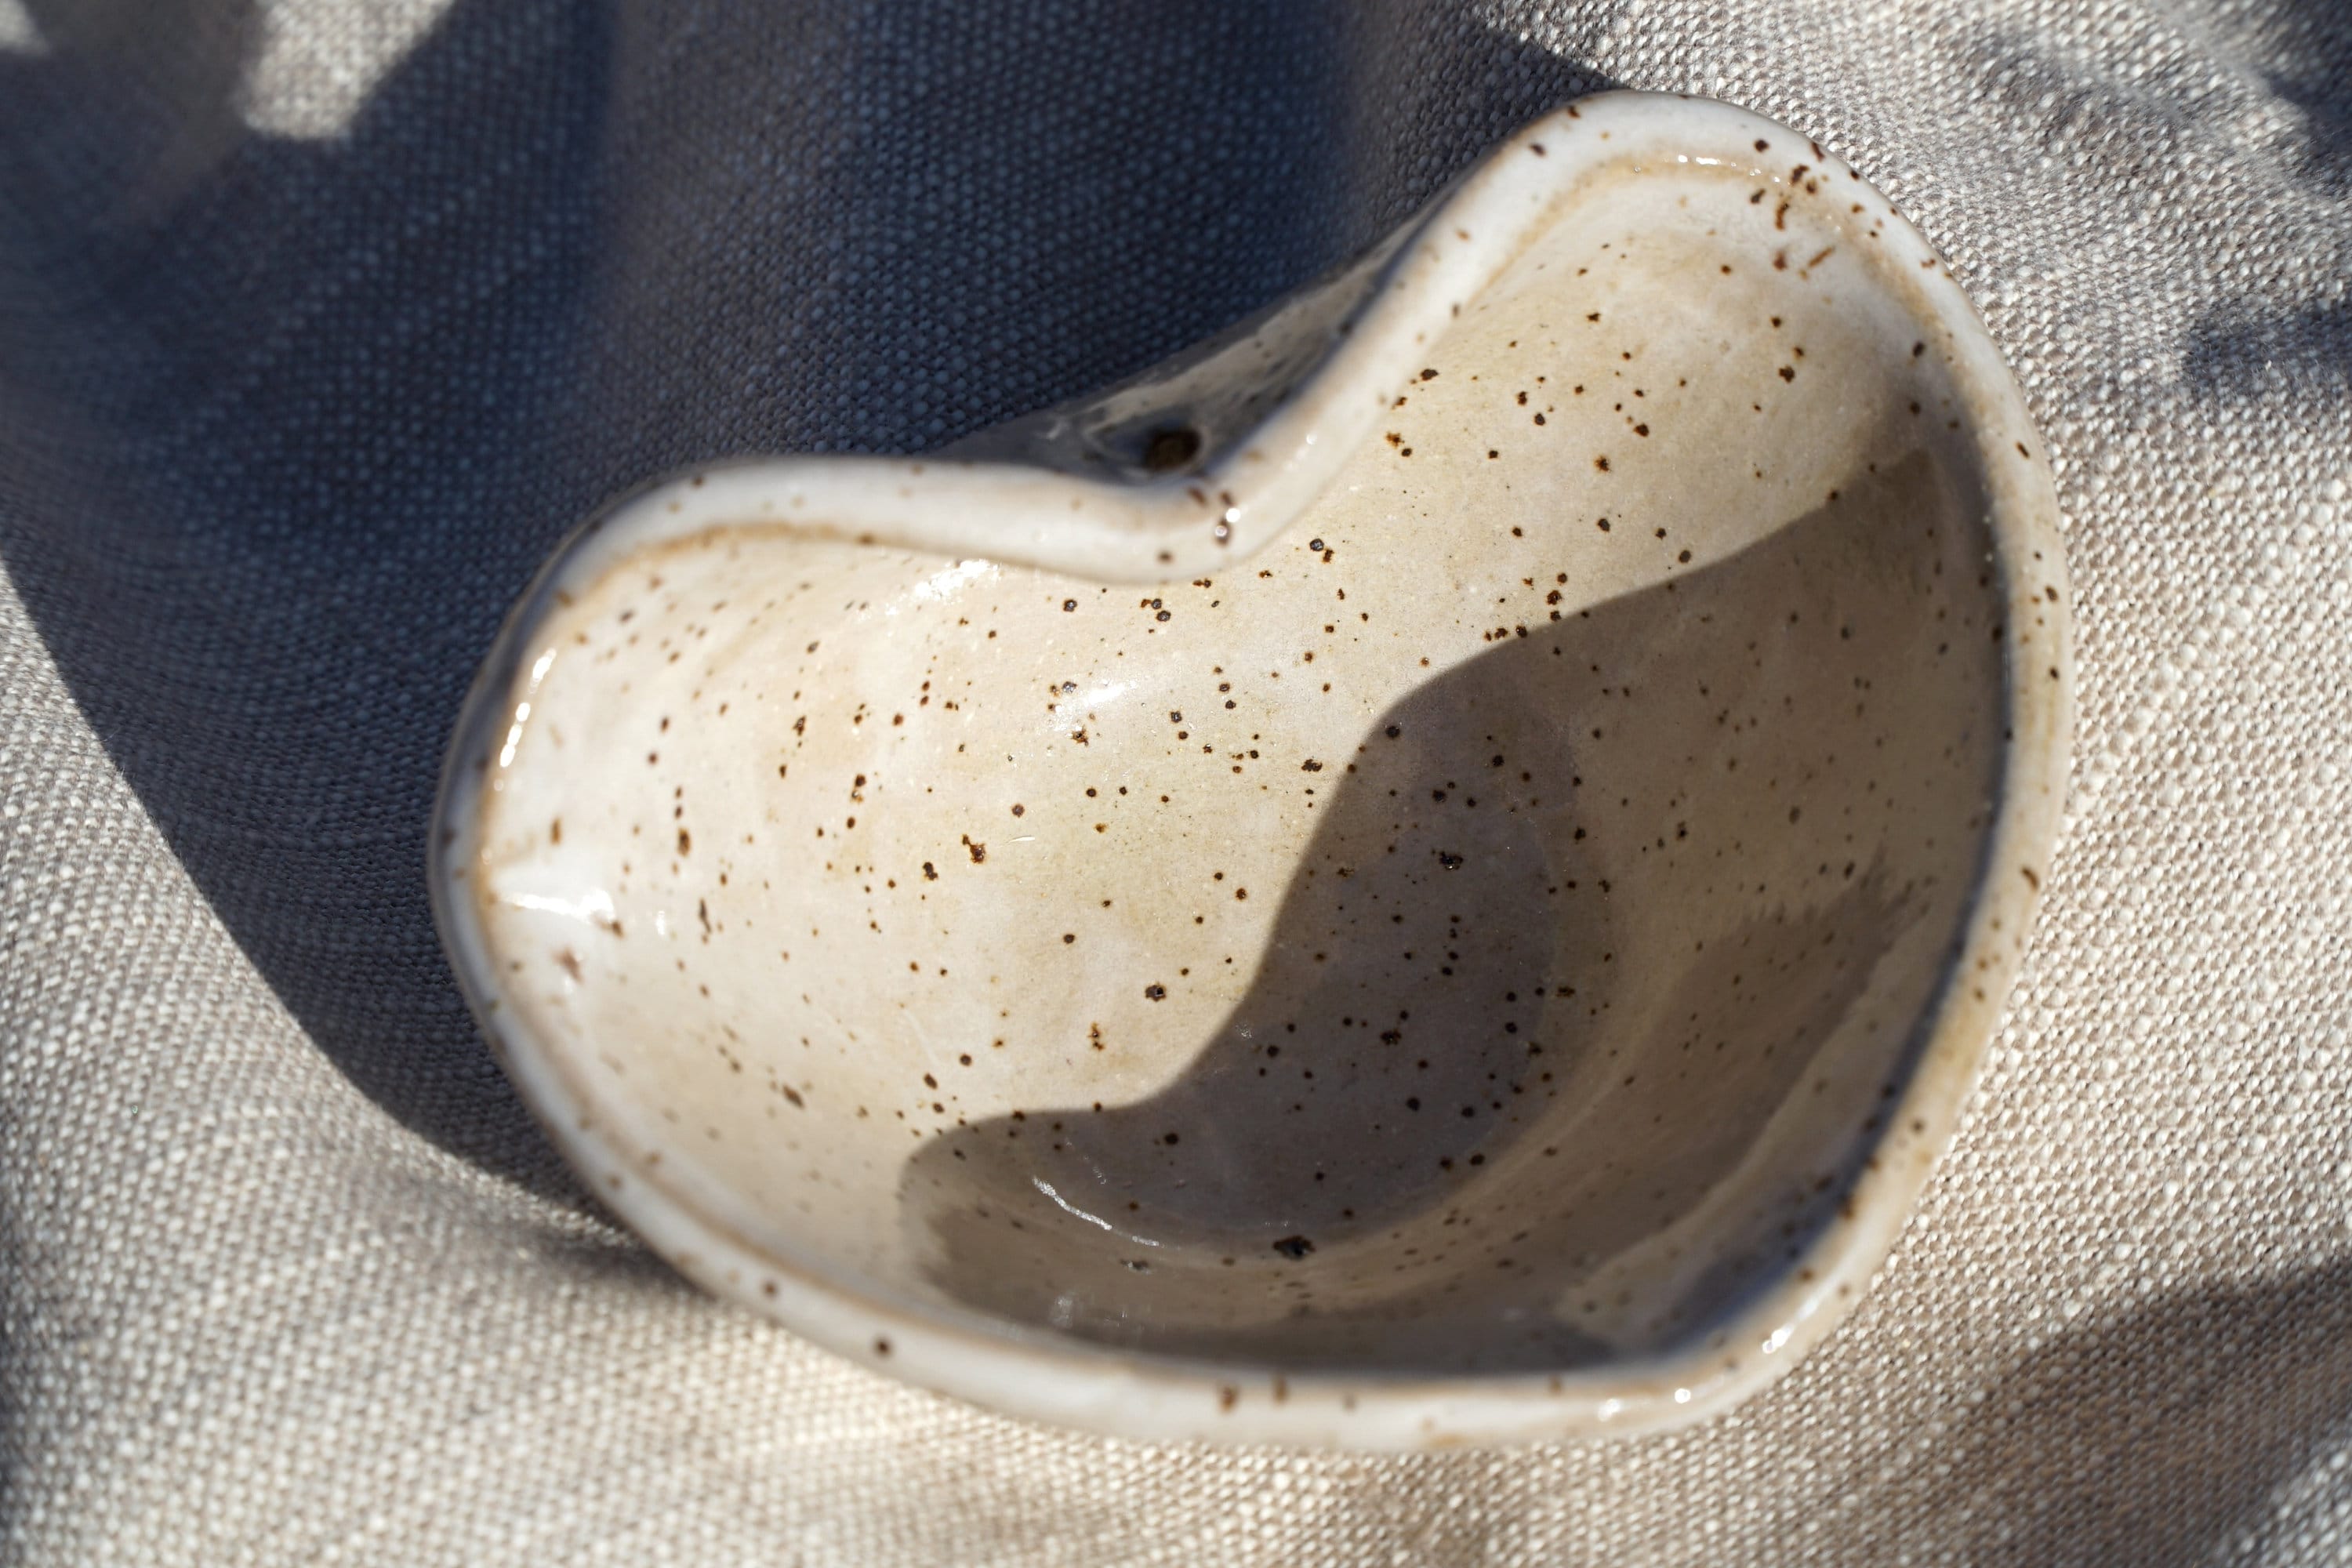 Stoneware Incense Bowl - Heart Shaped Bowl with Incense Holder - Tea Light Votive - Small Bowl - Incense Dish - White Ceramic Heart Dish